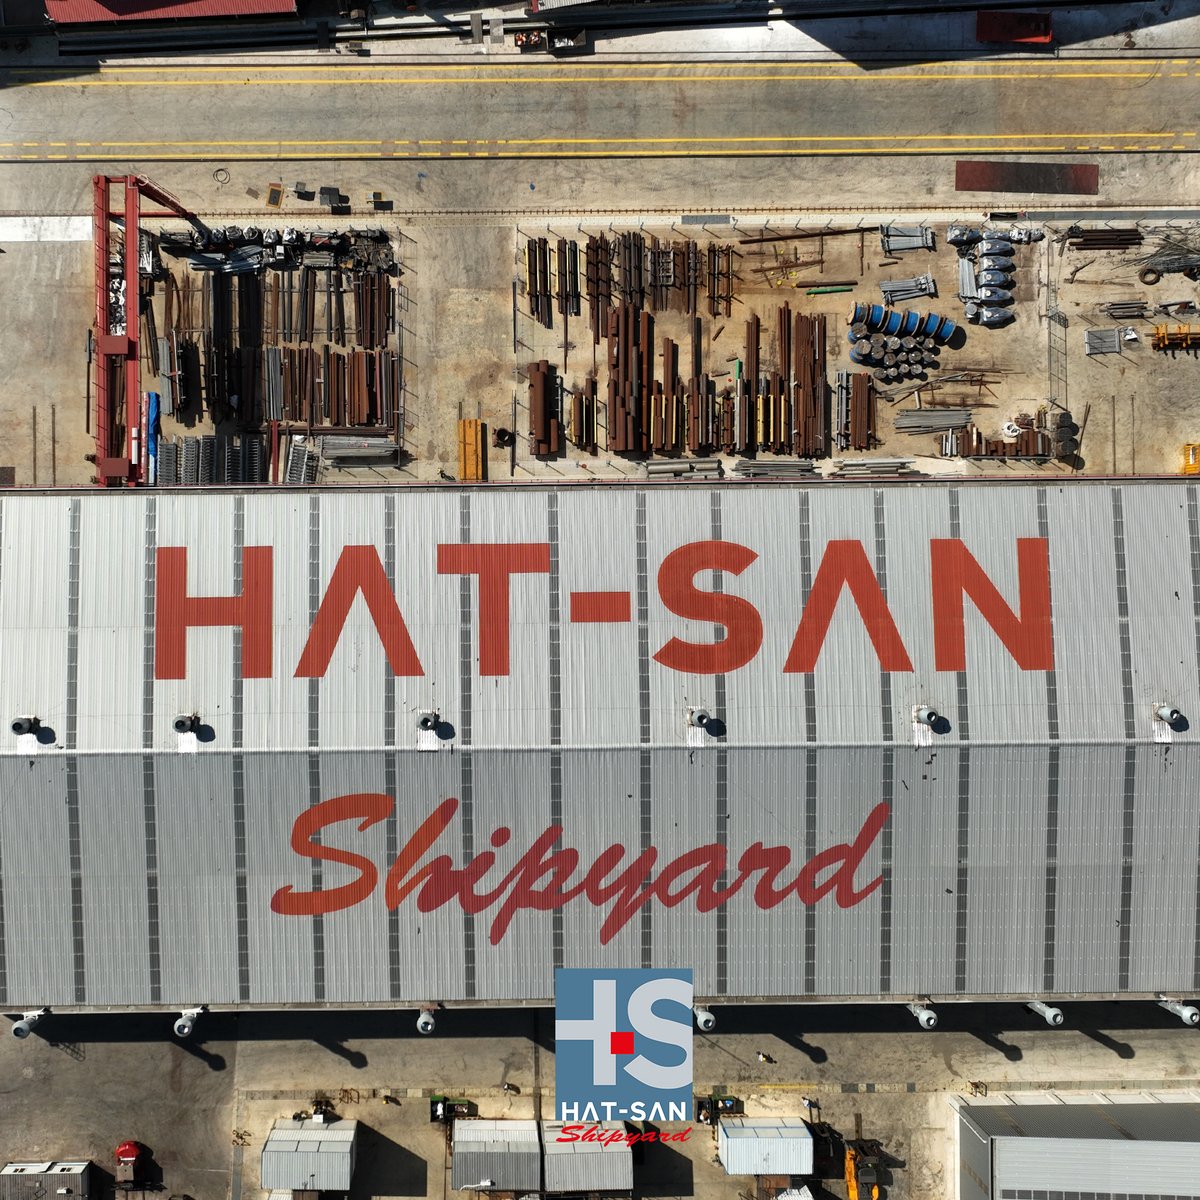 Hat-San Shipyard Continues to Develop💪 Hat- San Tersanesi Büyümeye Devam Ediyor. #hatsan #hatsanshipyard #hatsn #hatsangemi